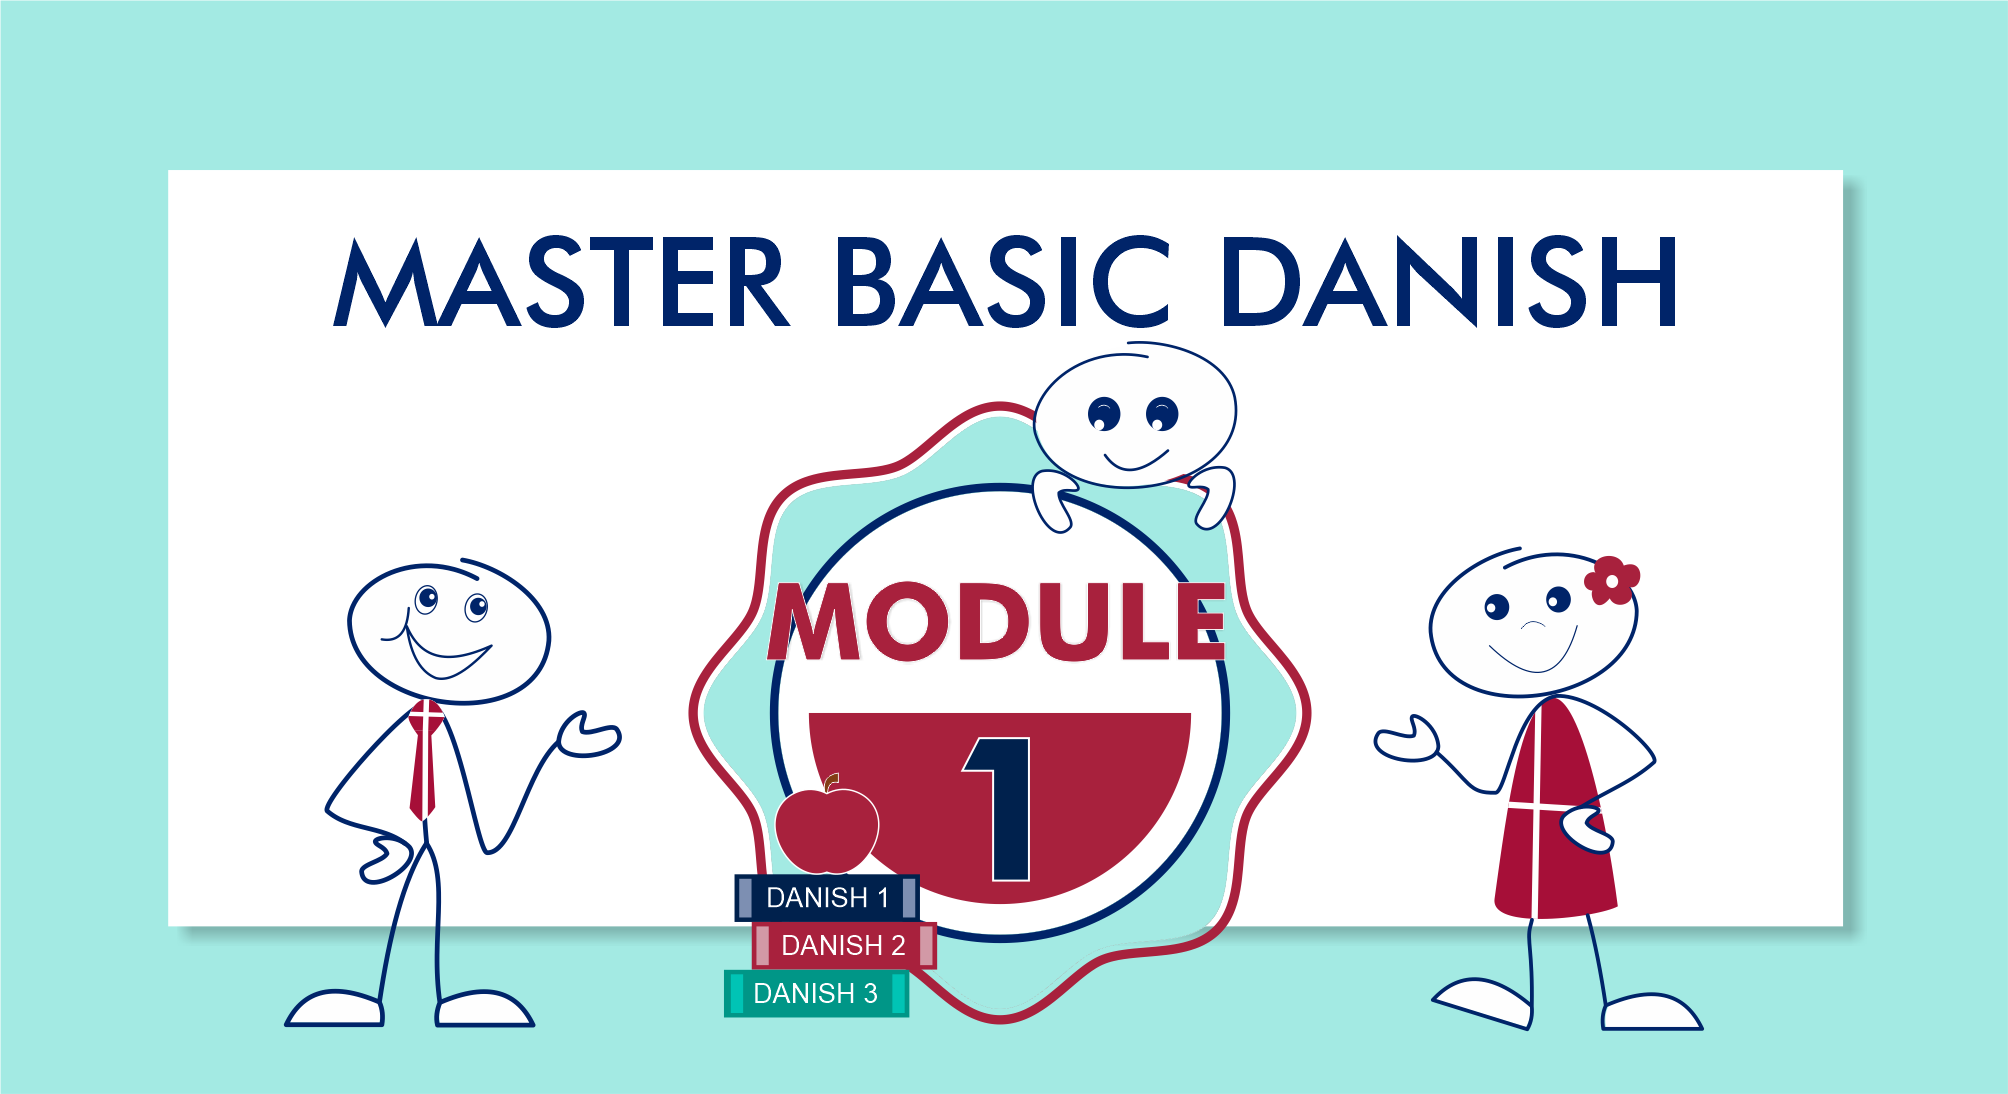 Master basic Danish